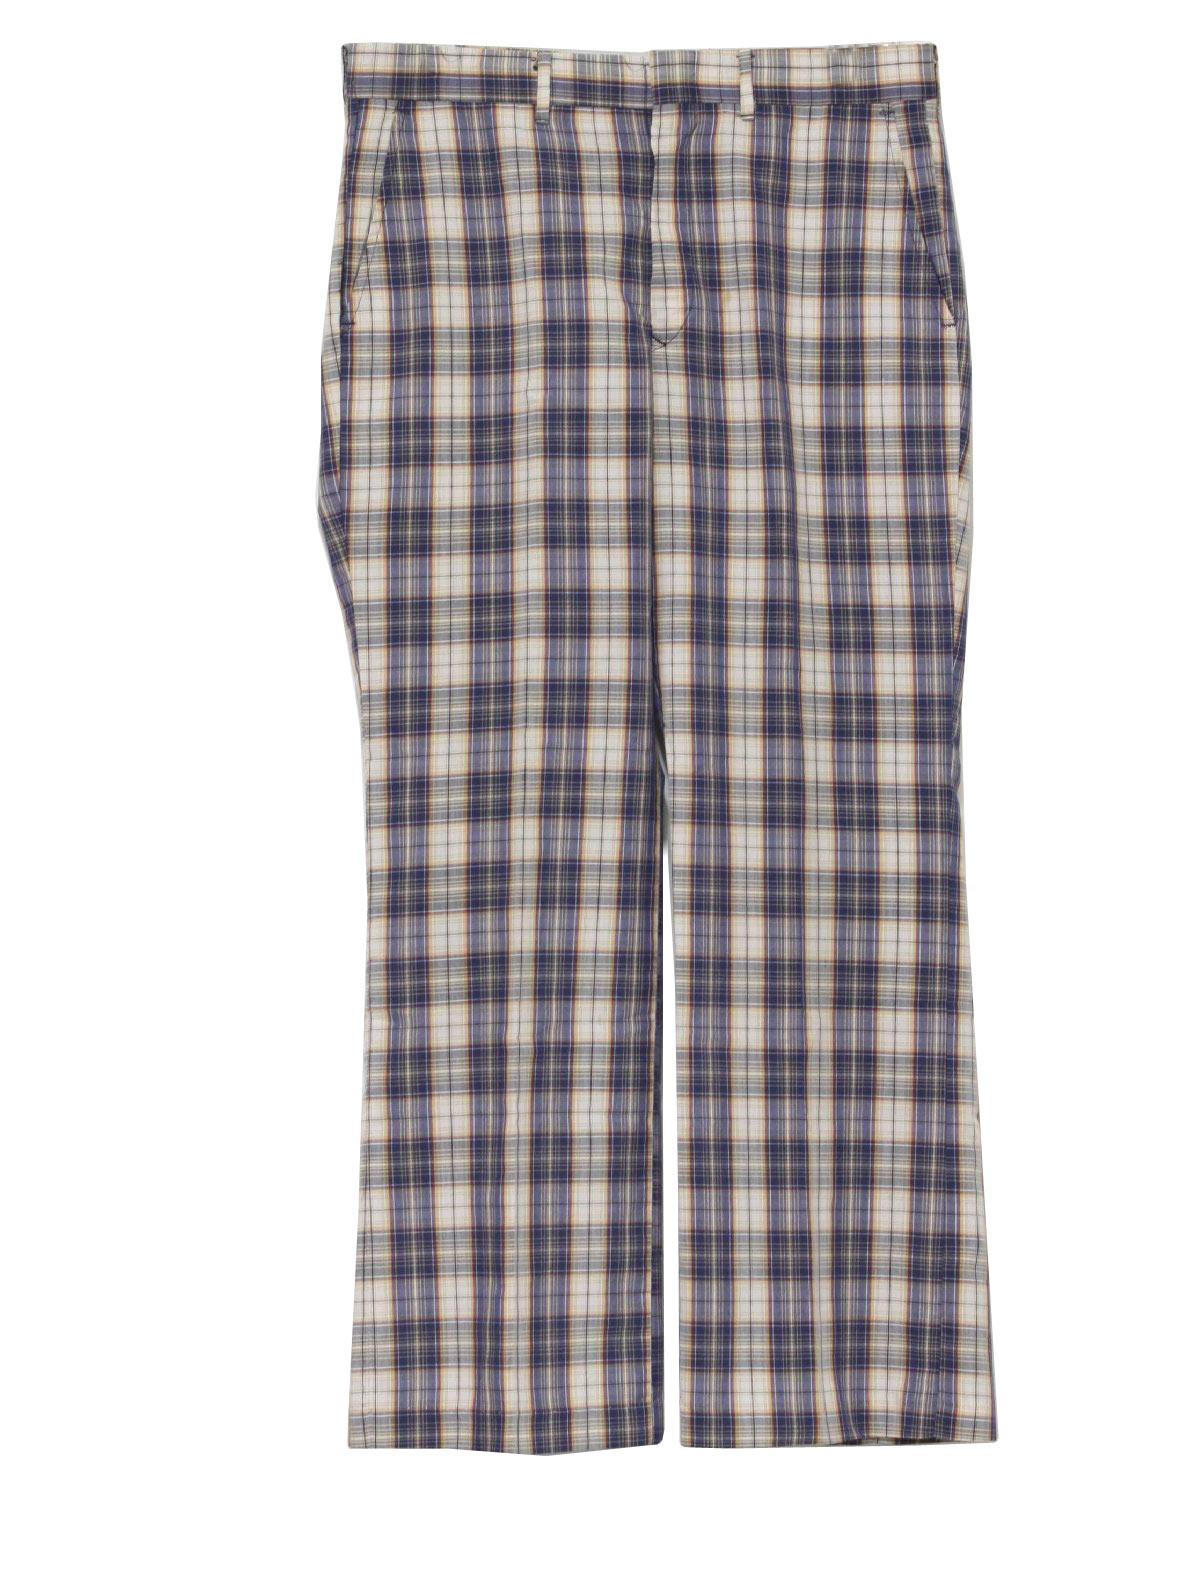 Plaid Golf Pants In Men's Pants for sale | eBay